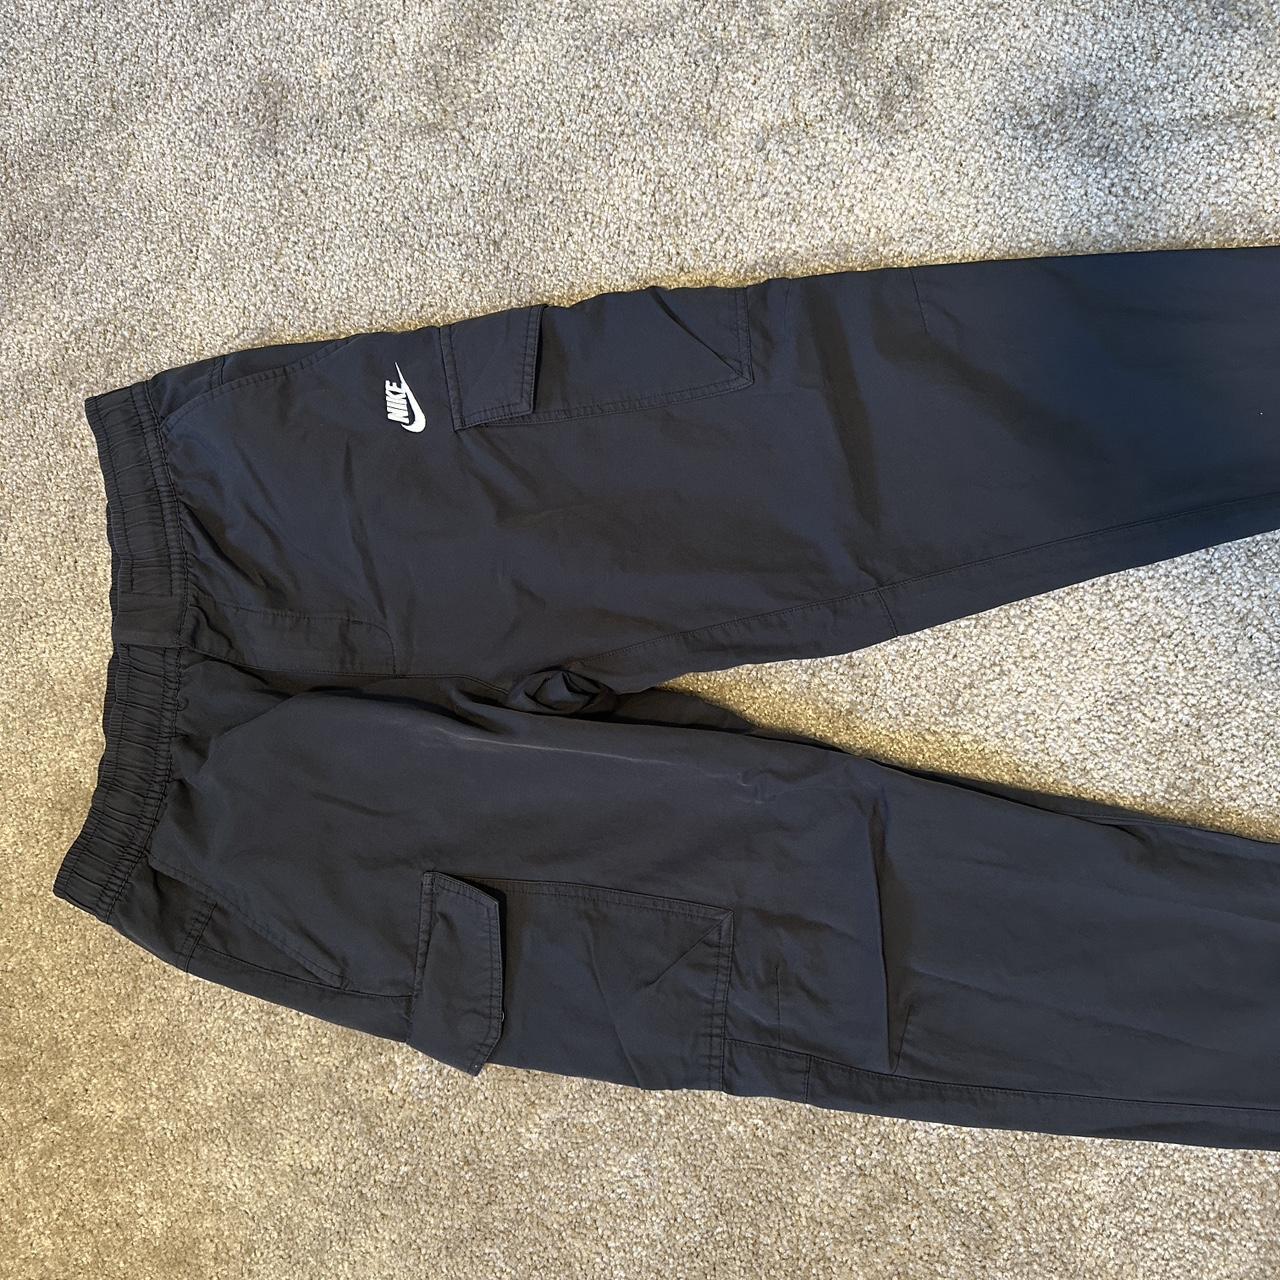 Nike Black Cargo Pants, size medium men. Had... - Depop